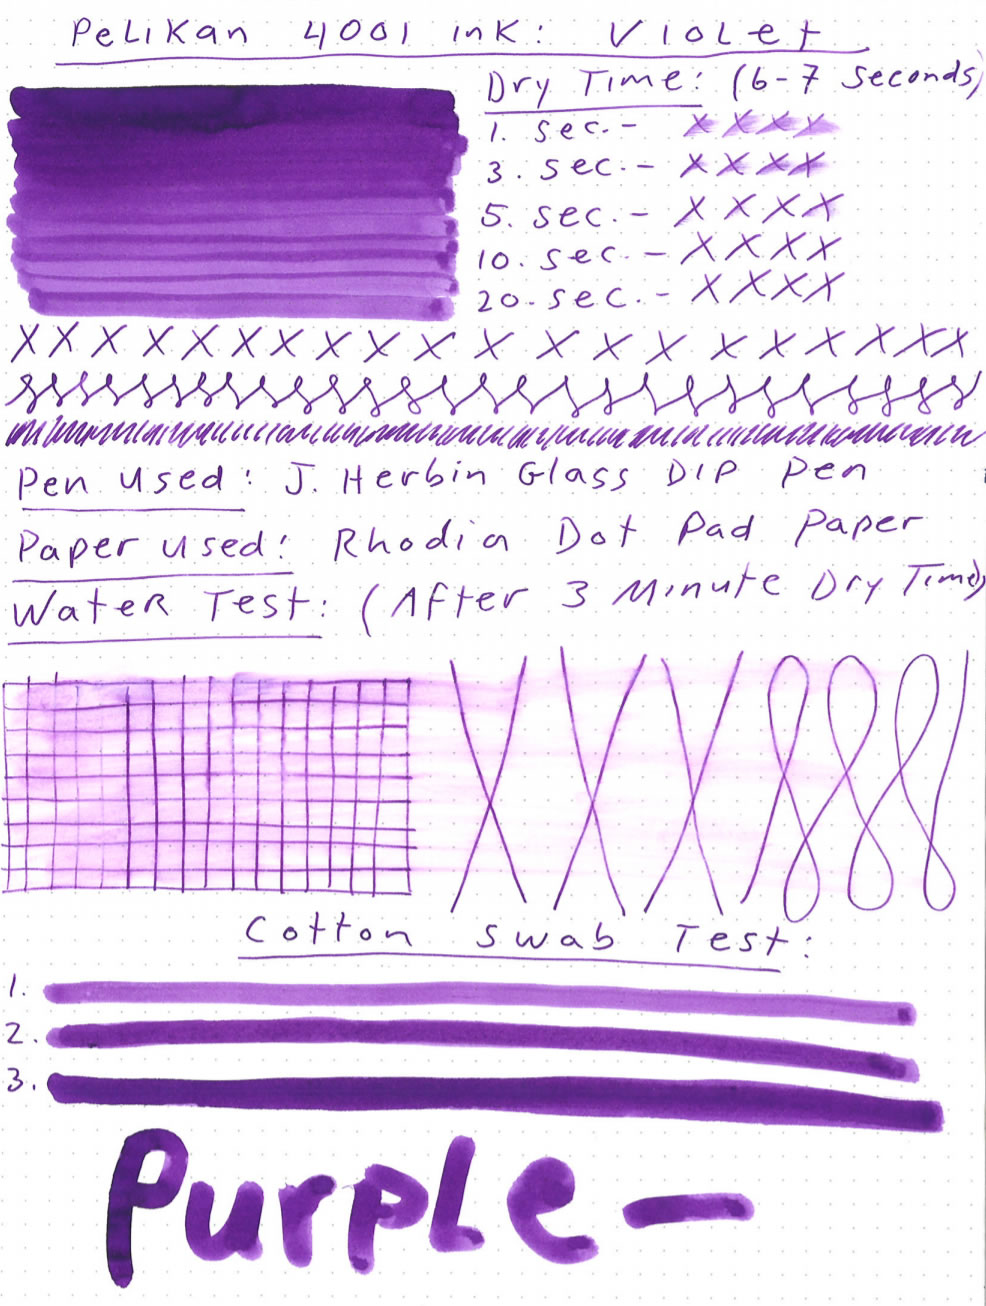 Pelikan 4001 Violet Ink Review - Pen Chalet